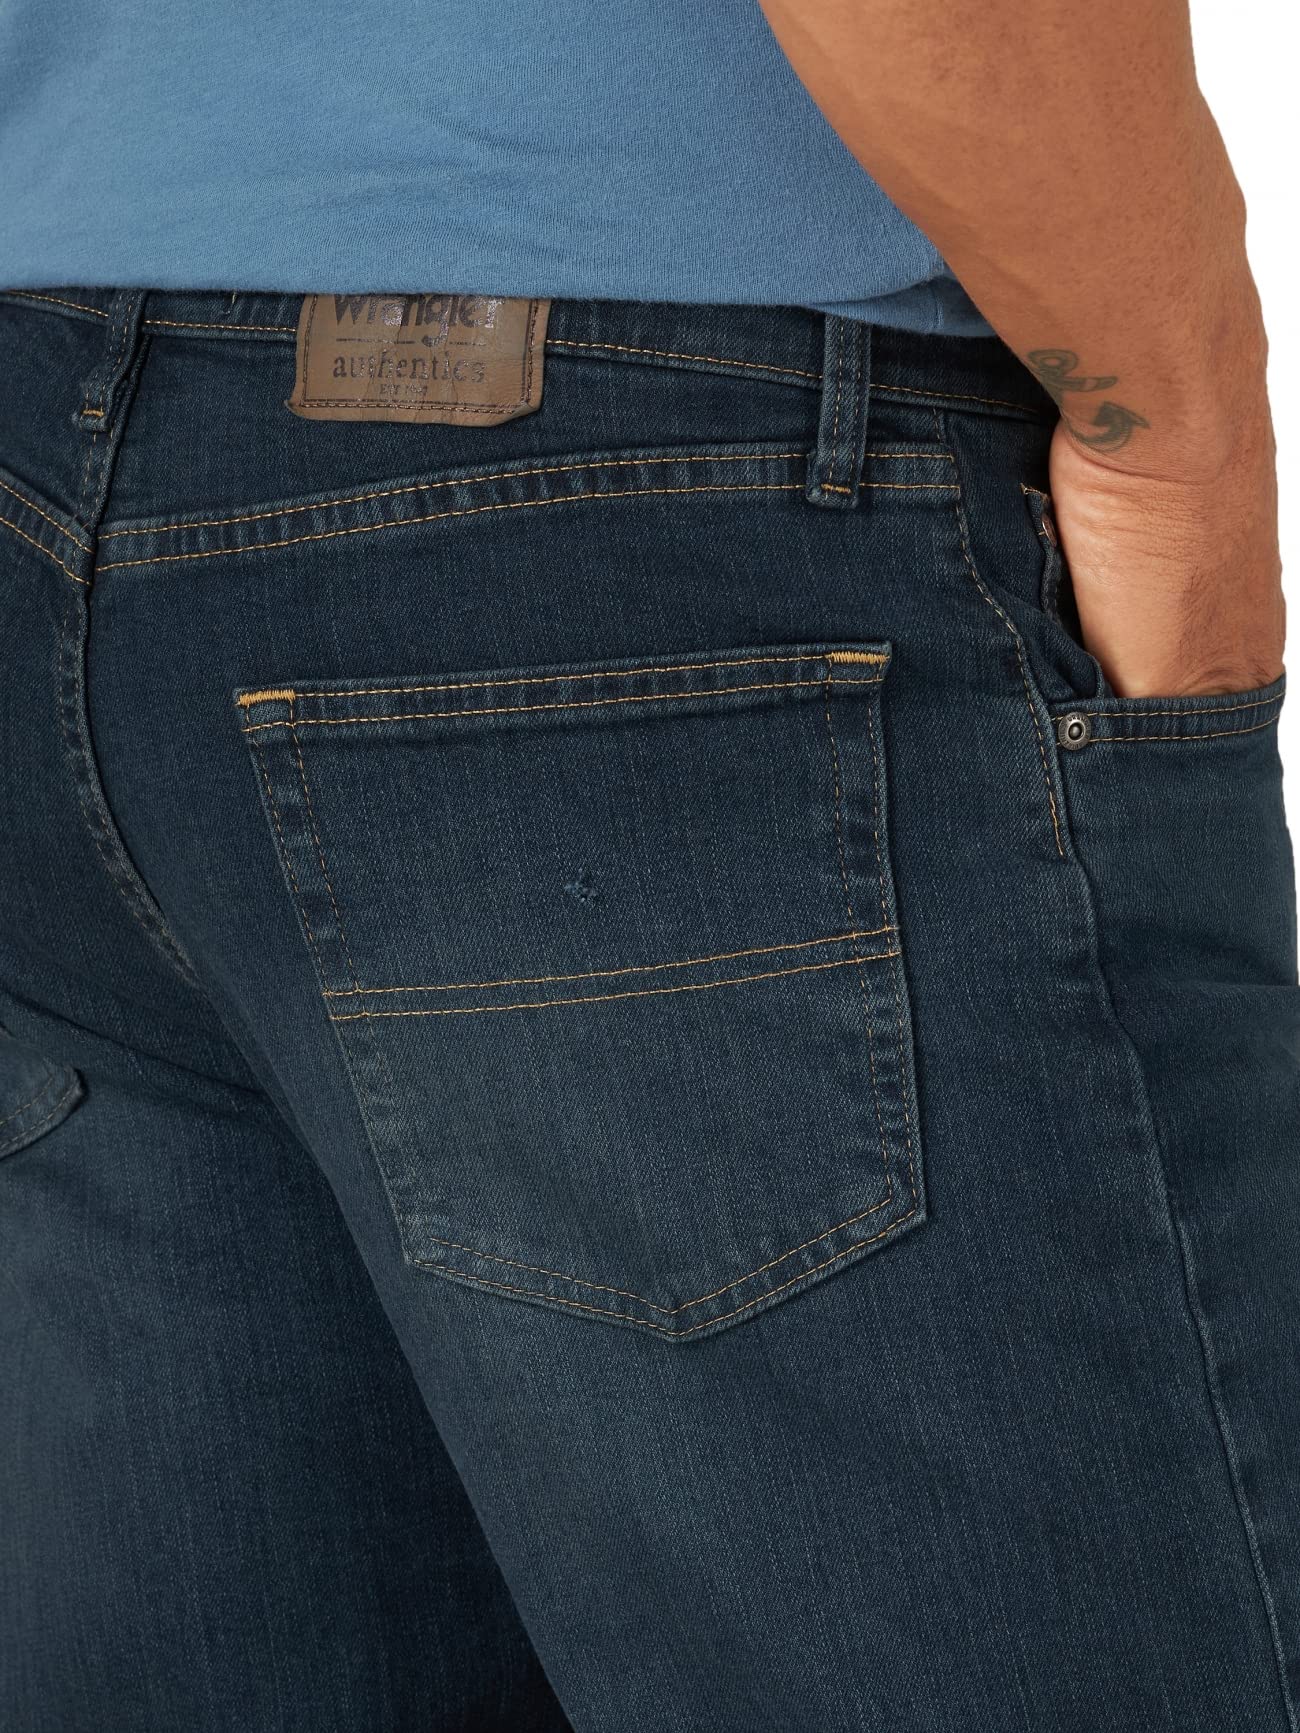 Wrangler Authentics Men's Classic 5-Pocket Relaxed Fit Jean, Military Blue Flex, 42W x 32L